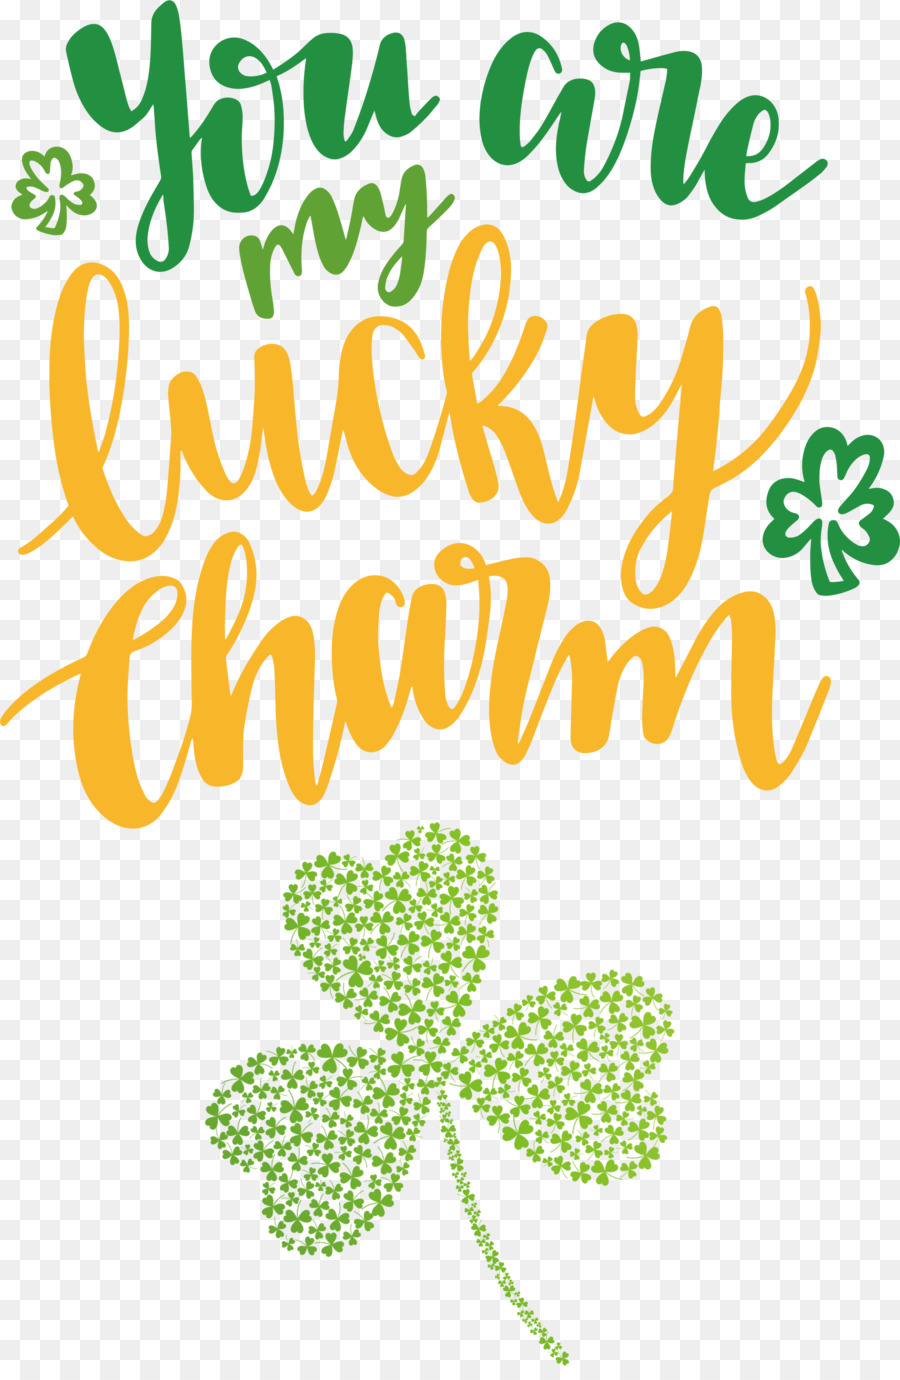 You Are My Lucky Charm St Patricks Day Saint Patrick